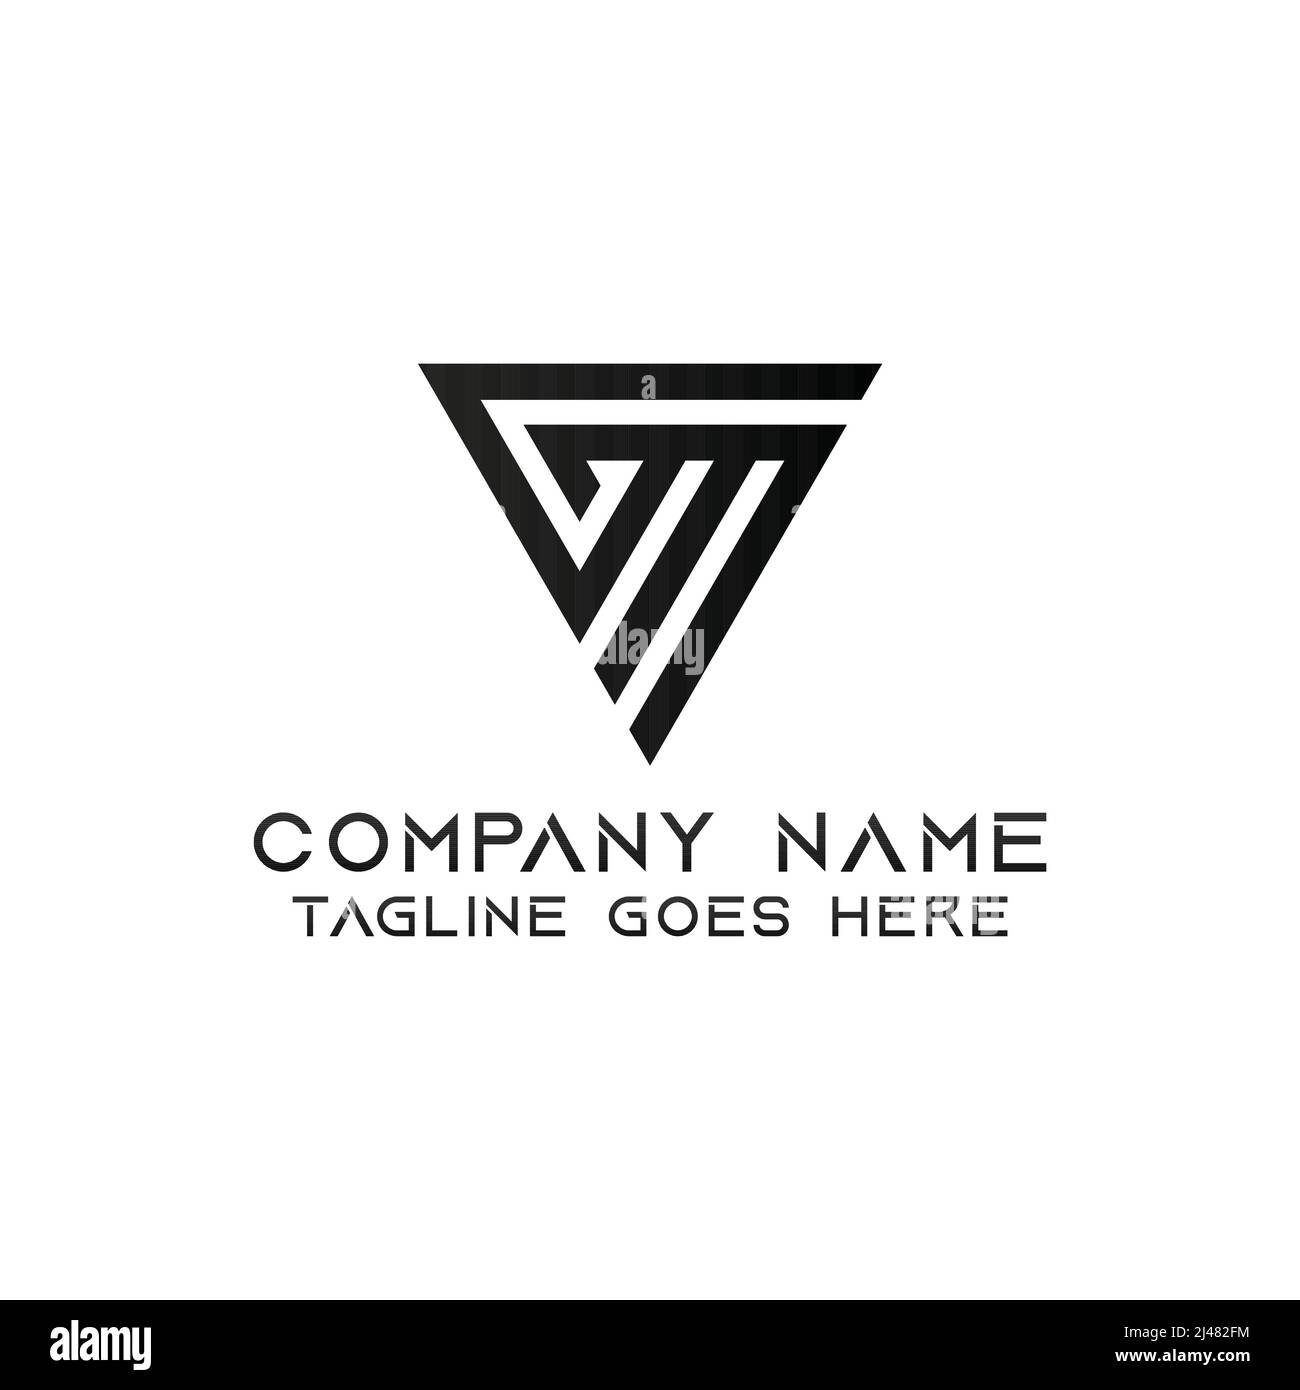 Premium Vector  Gm logo design template vector graphic branding element